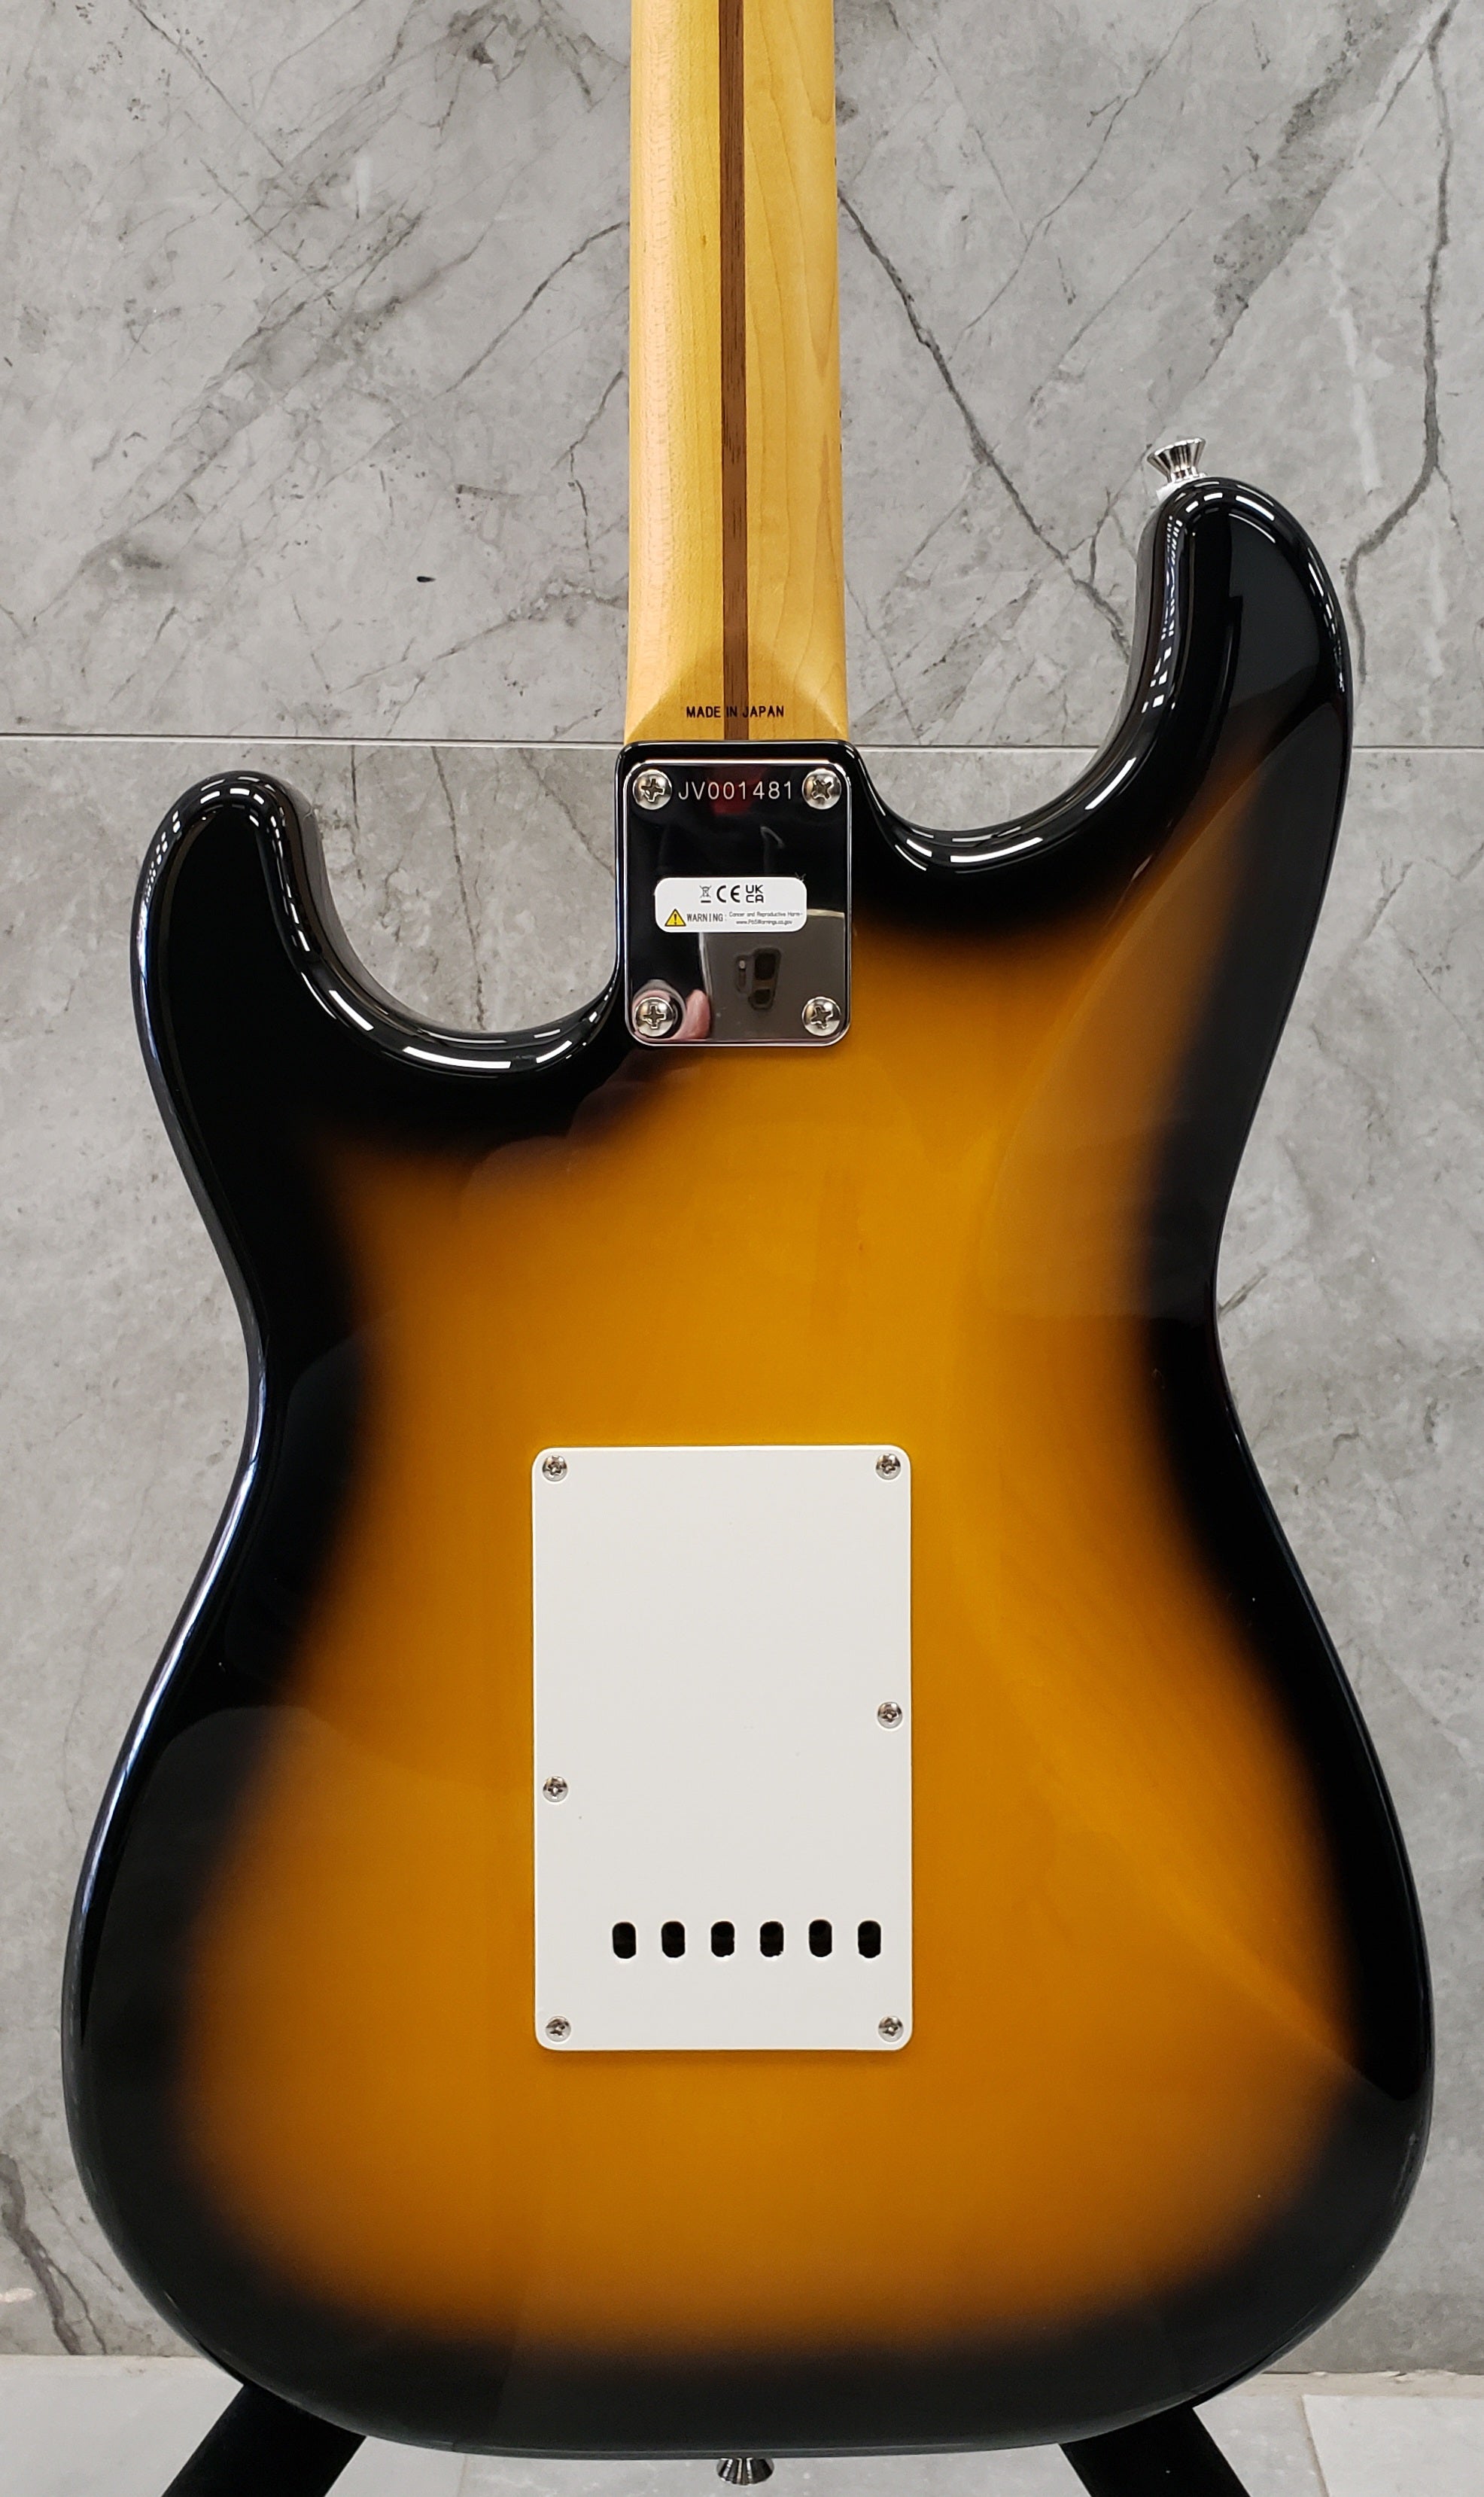 FENDER MADE IN JAPAN JV Modified 50s Stratocaster HSS Maple Fingerboard  2-Color Sunburst 0251802303 SERIAL NUMBER JV001481 - 7.0 LBS